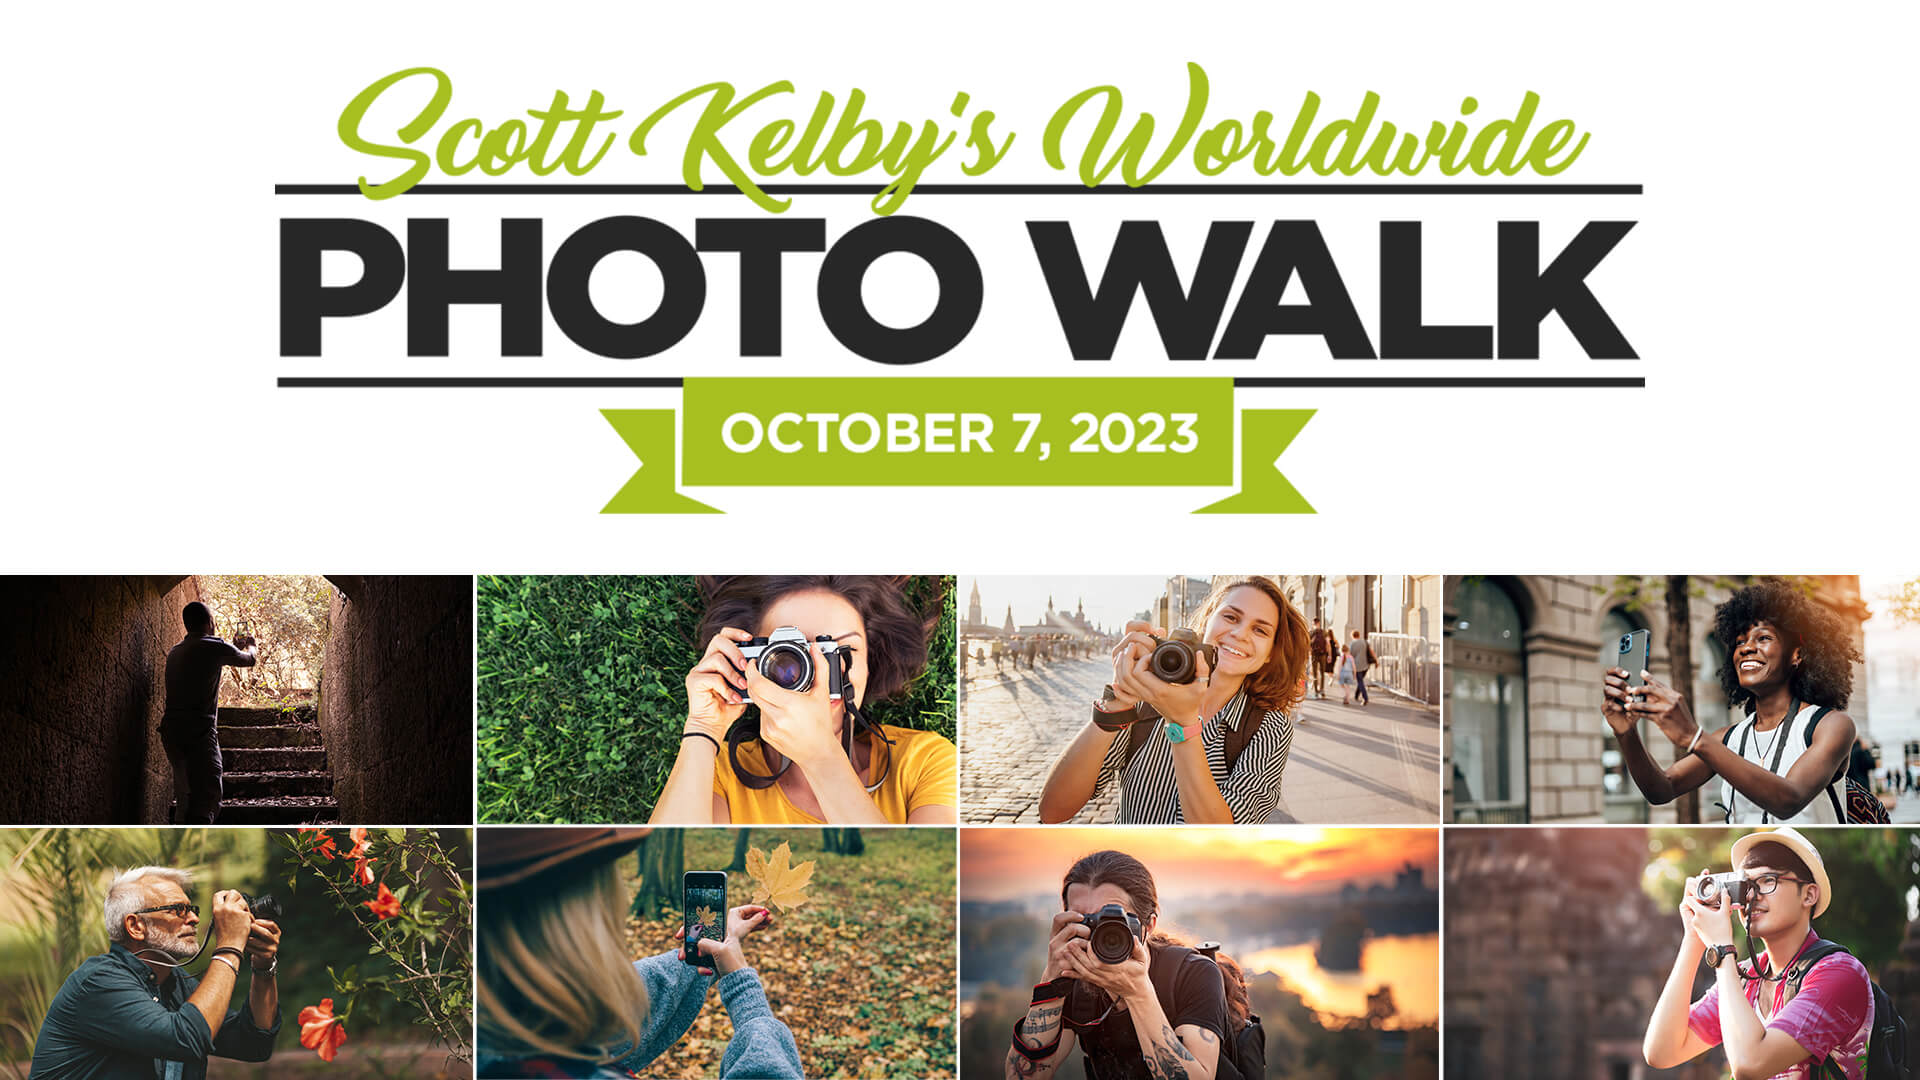 Scott Kelby’s worldwide photo walk 2023: Walk With A Cause!